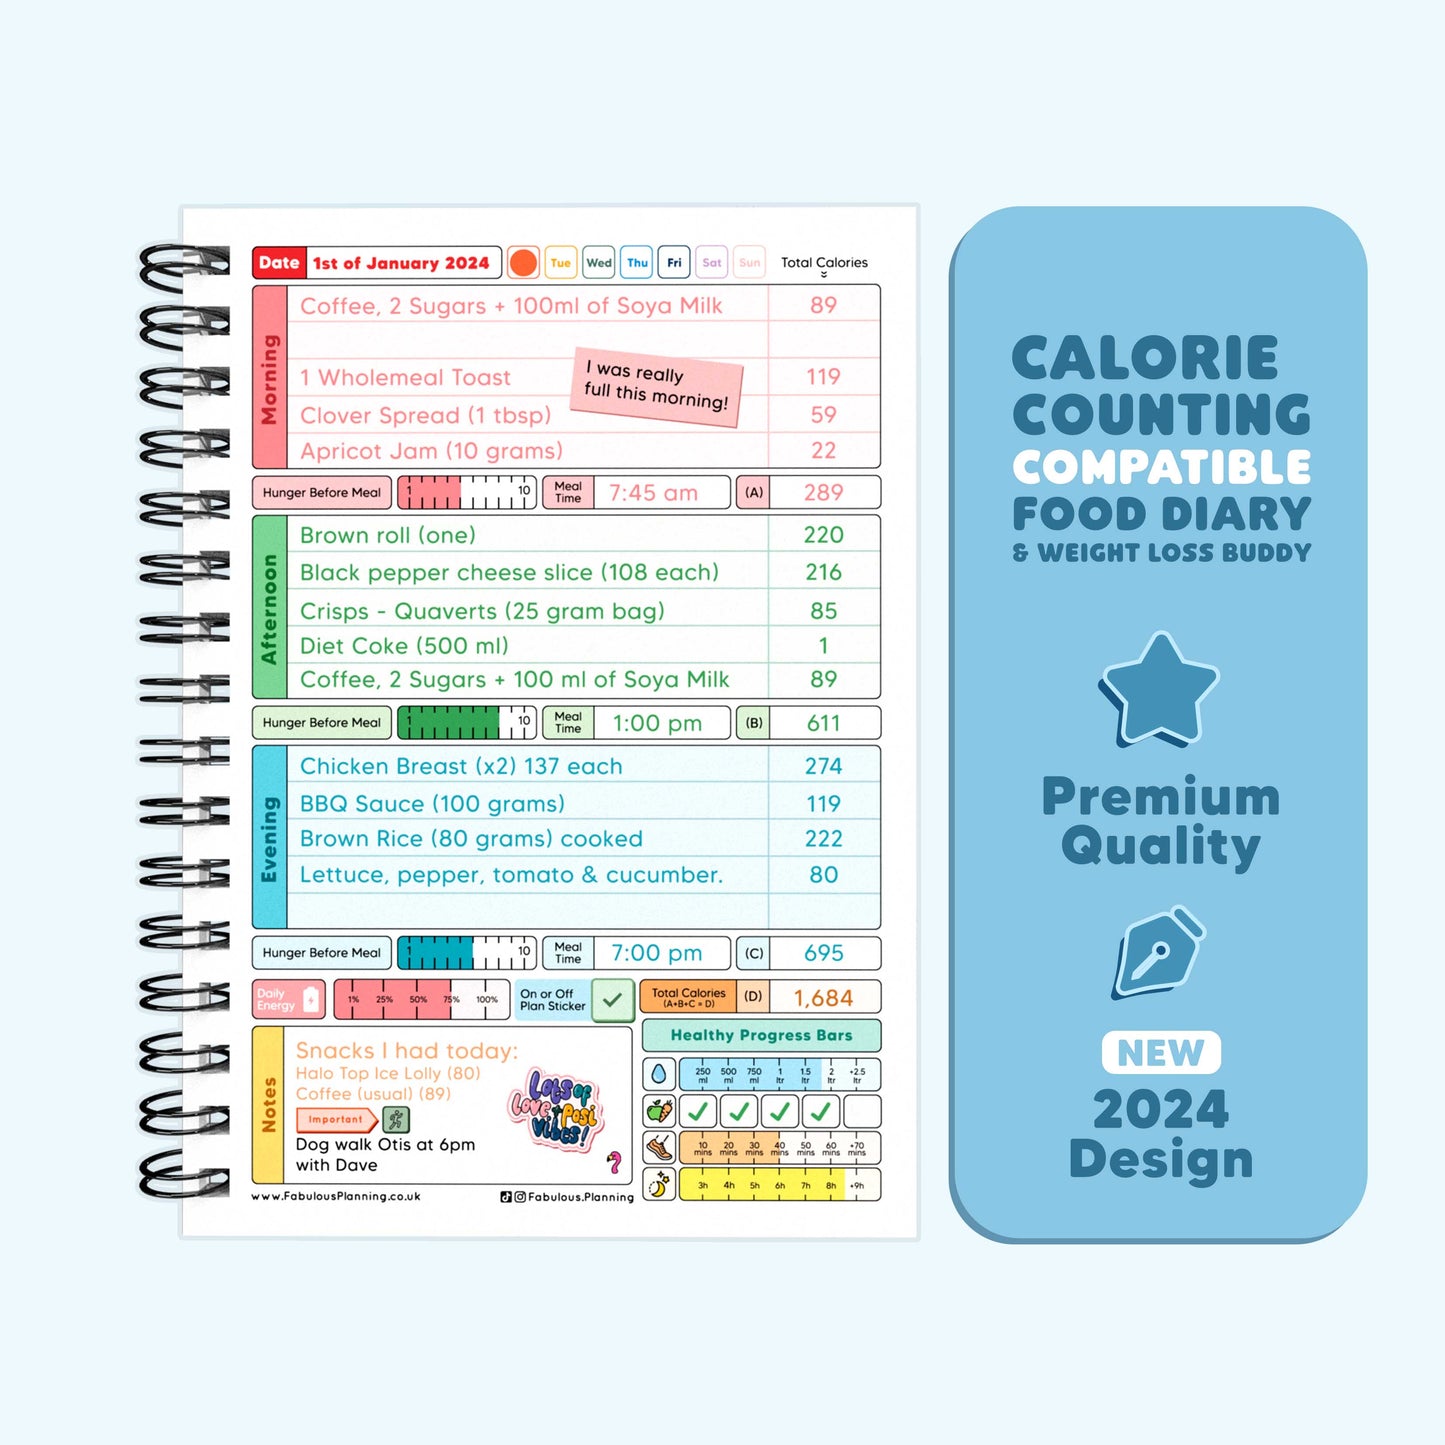 2024 Starter Food Diary Bundle